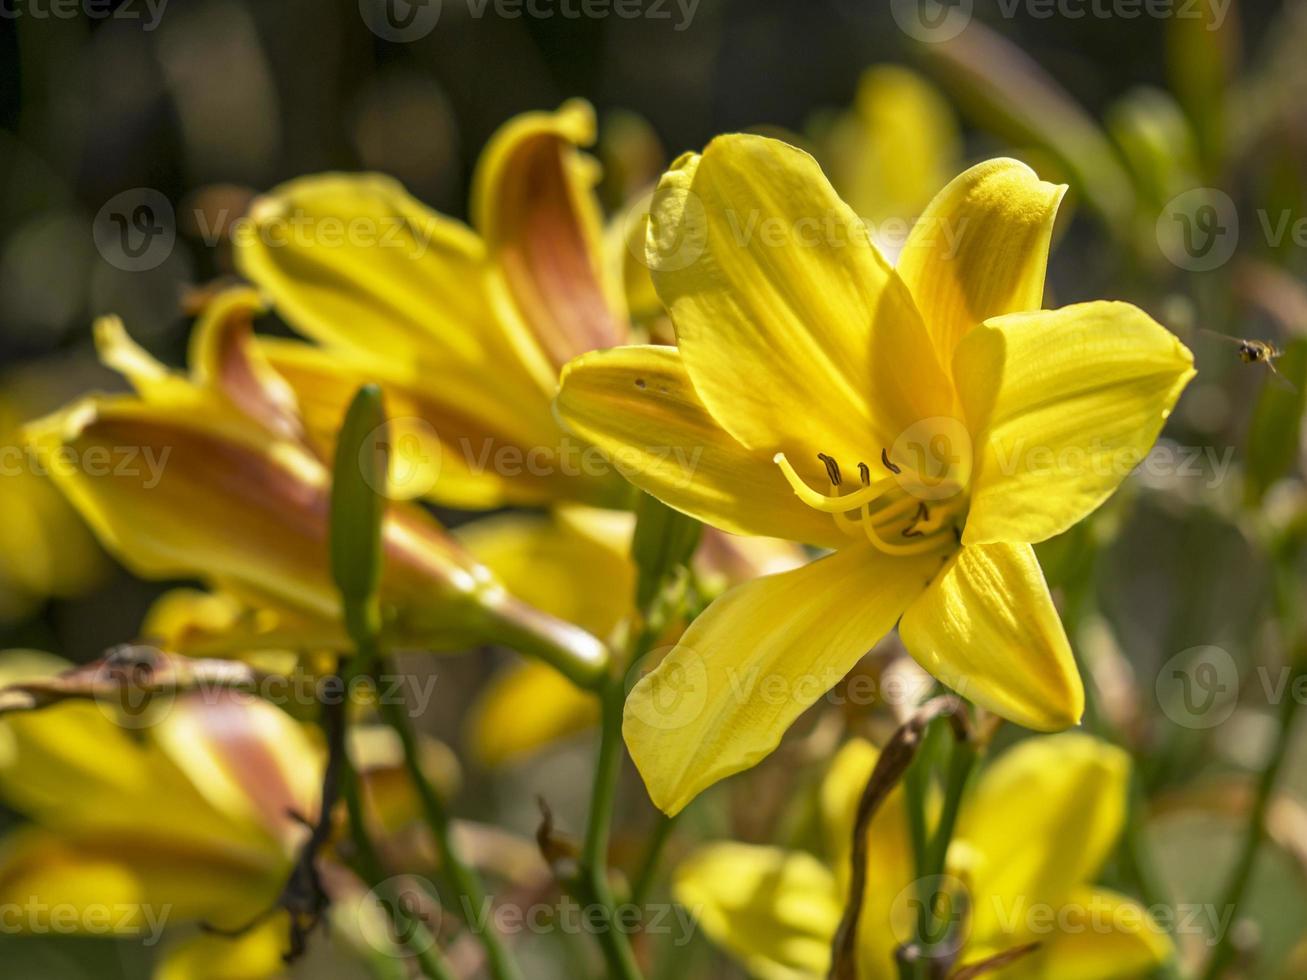 ljusgula hemerocallis daylily blommor i en trädgård foto